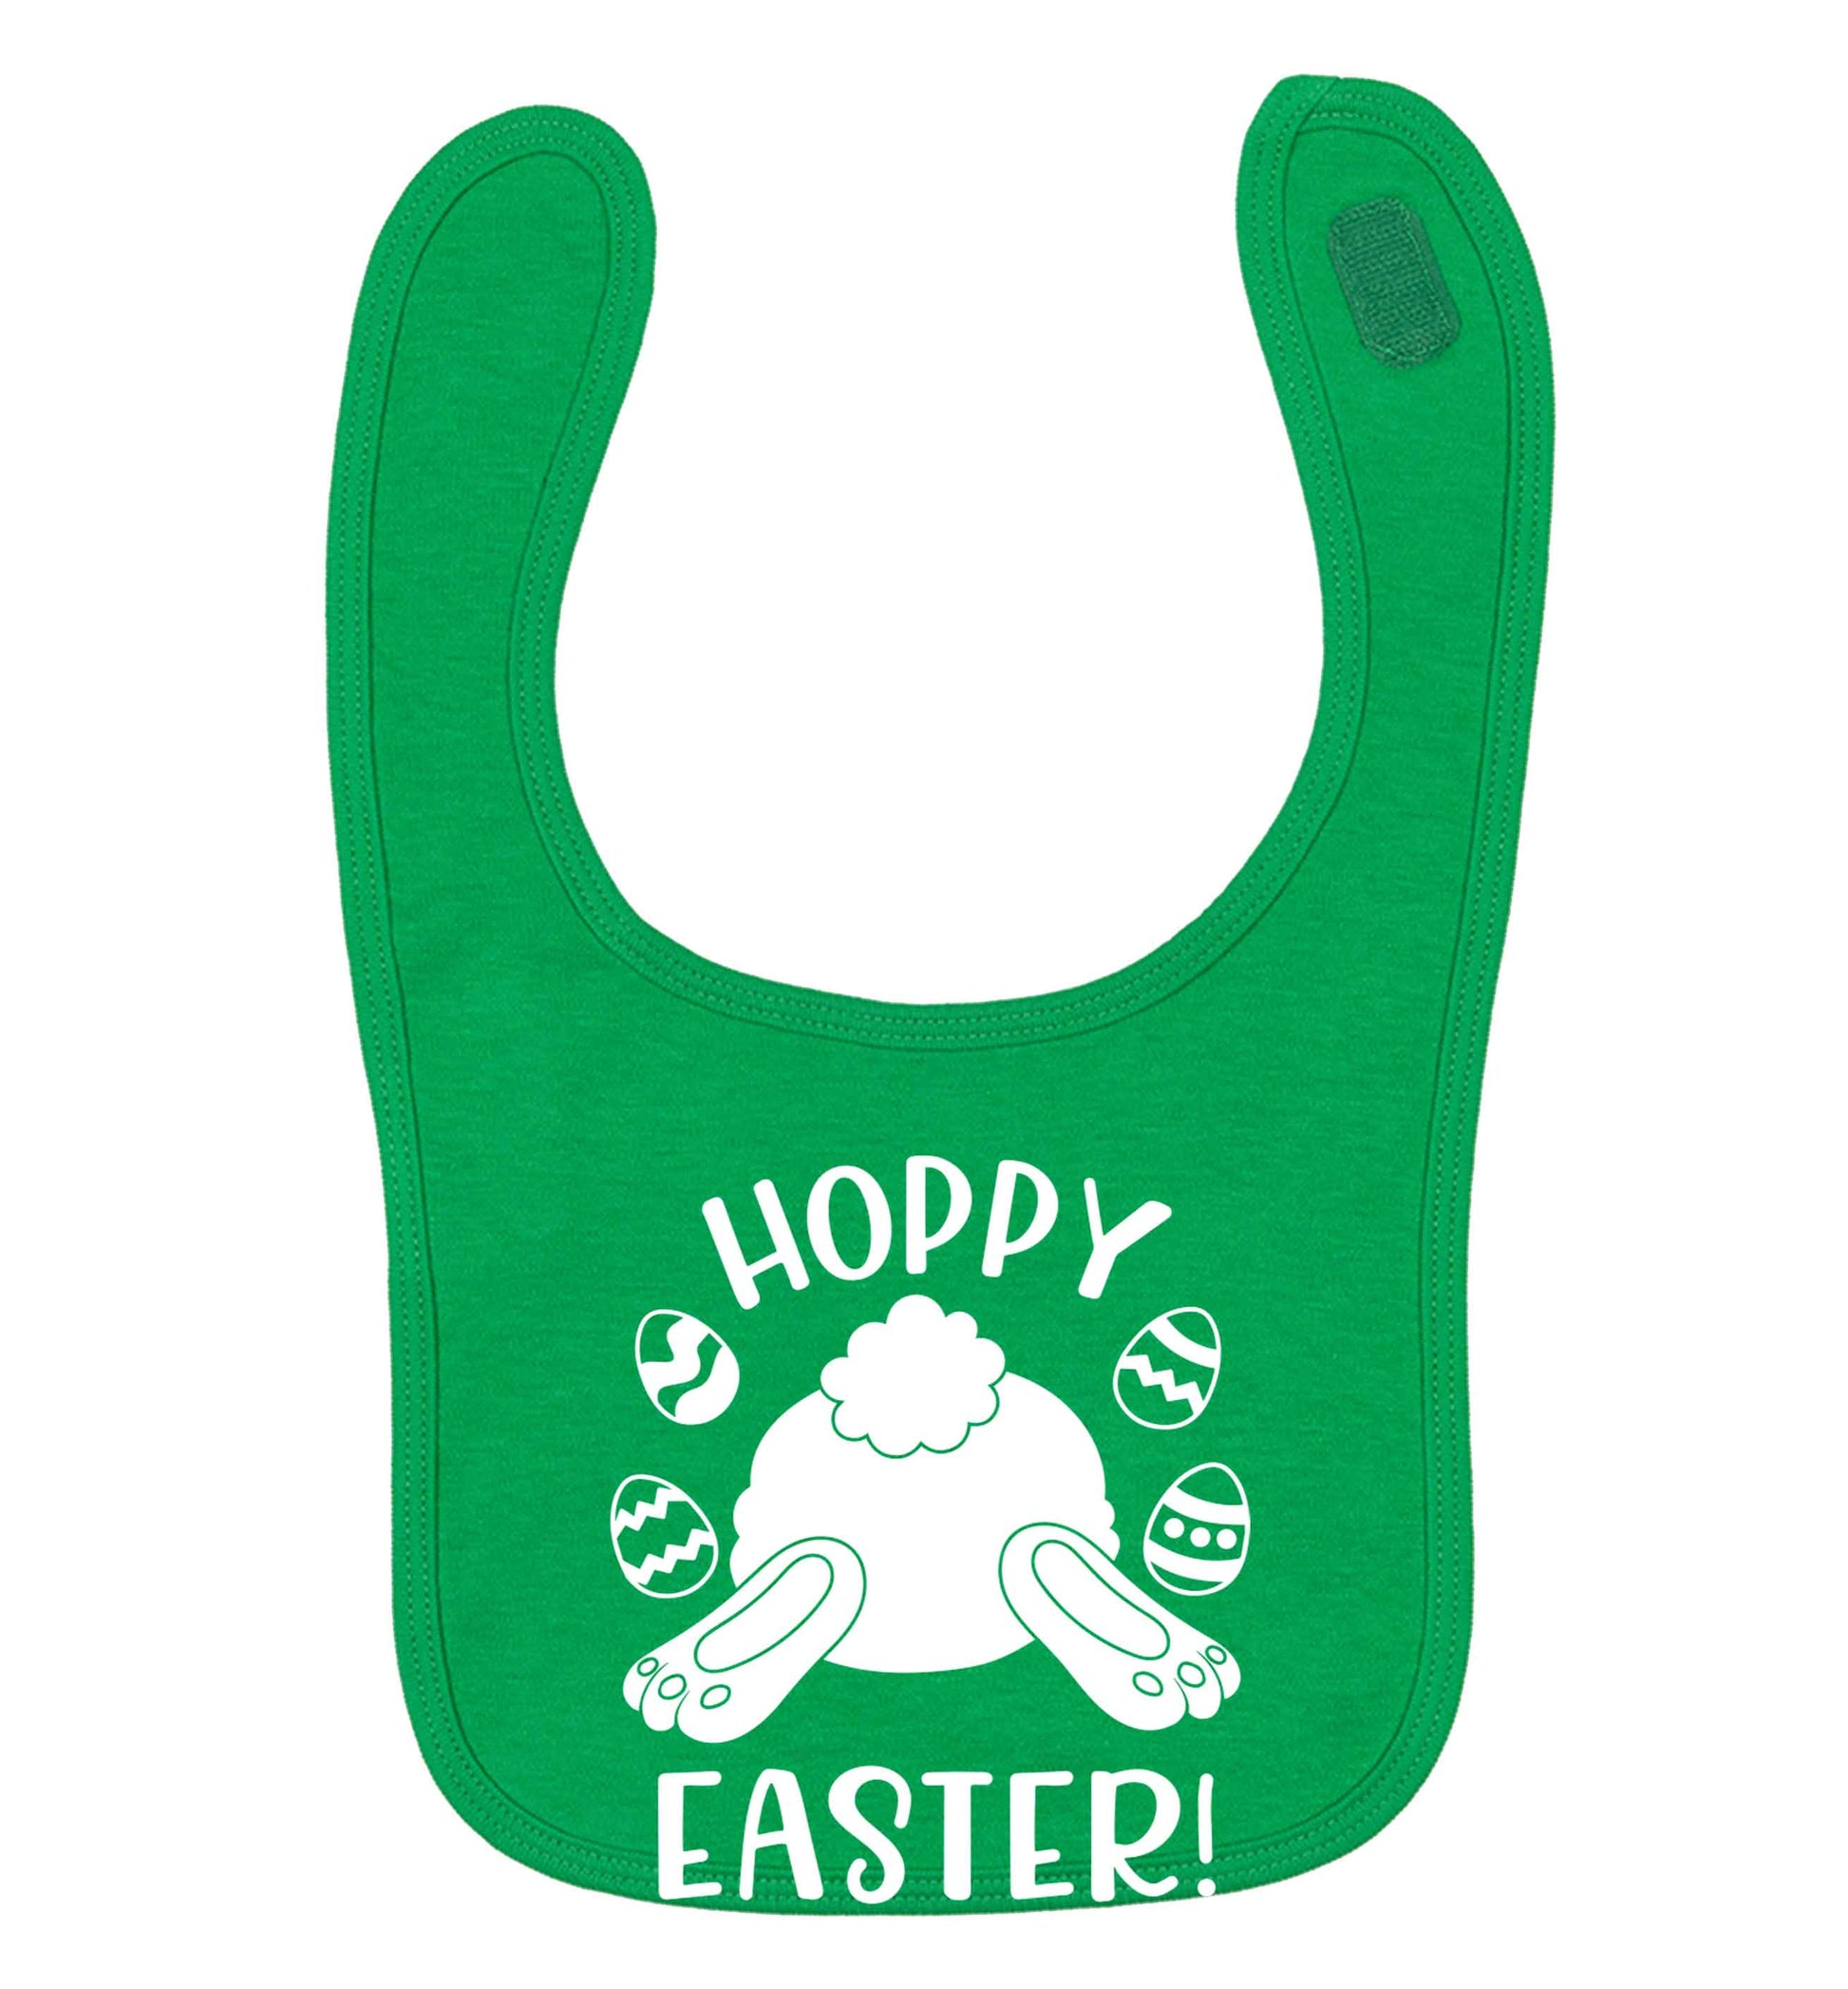 Hoppy Easter green baby bib